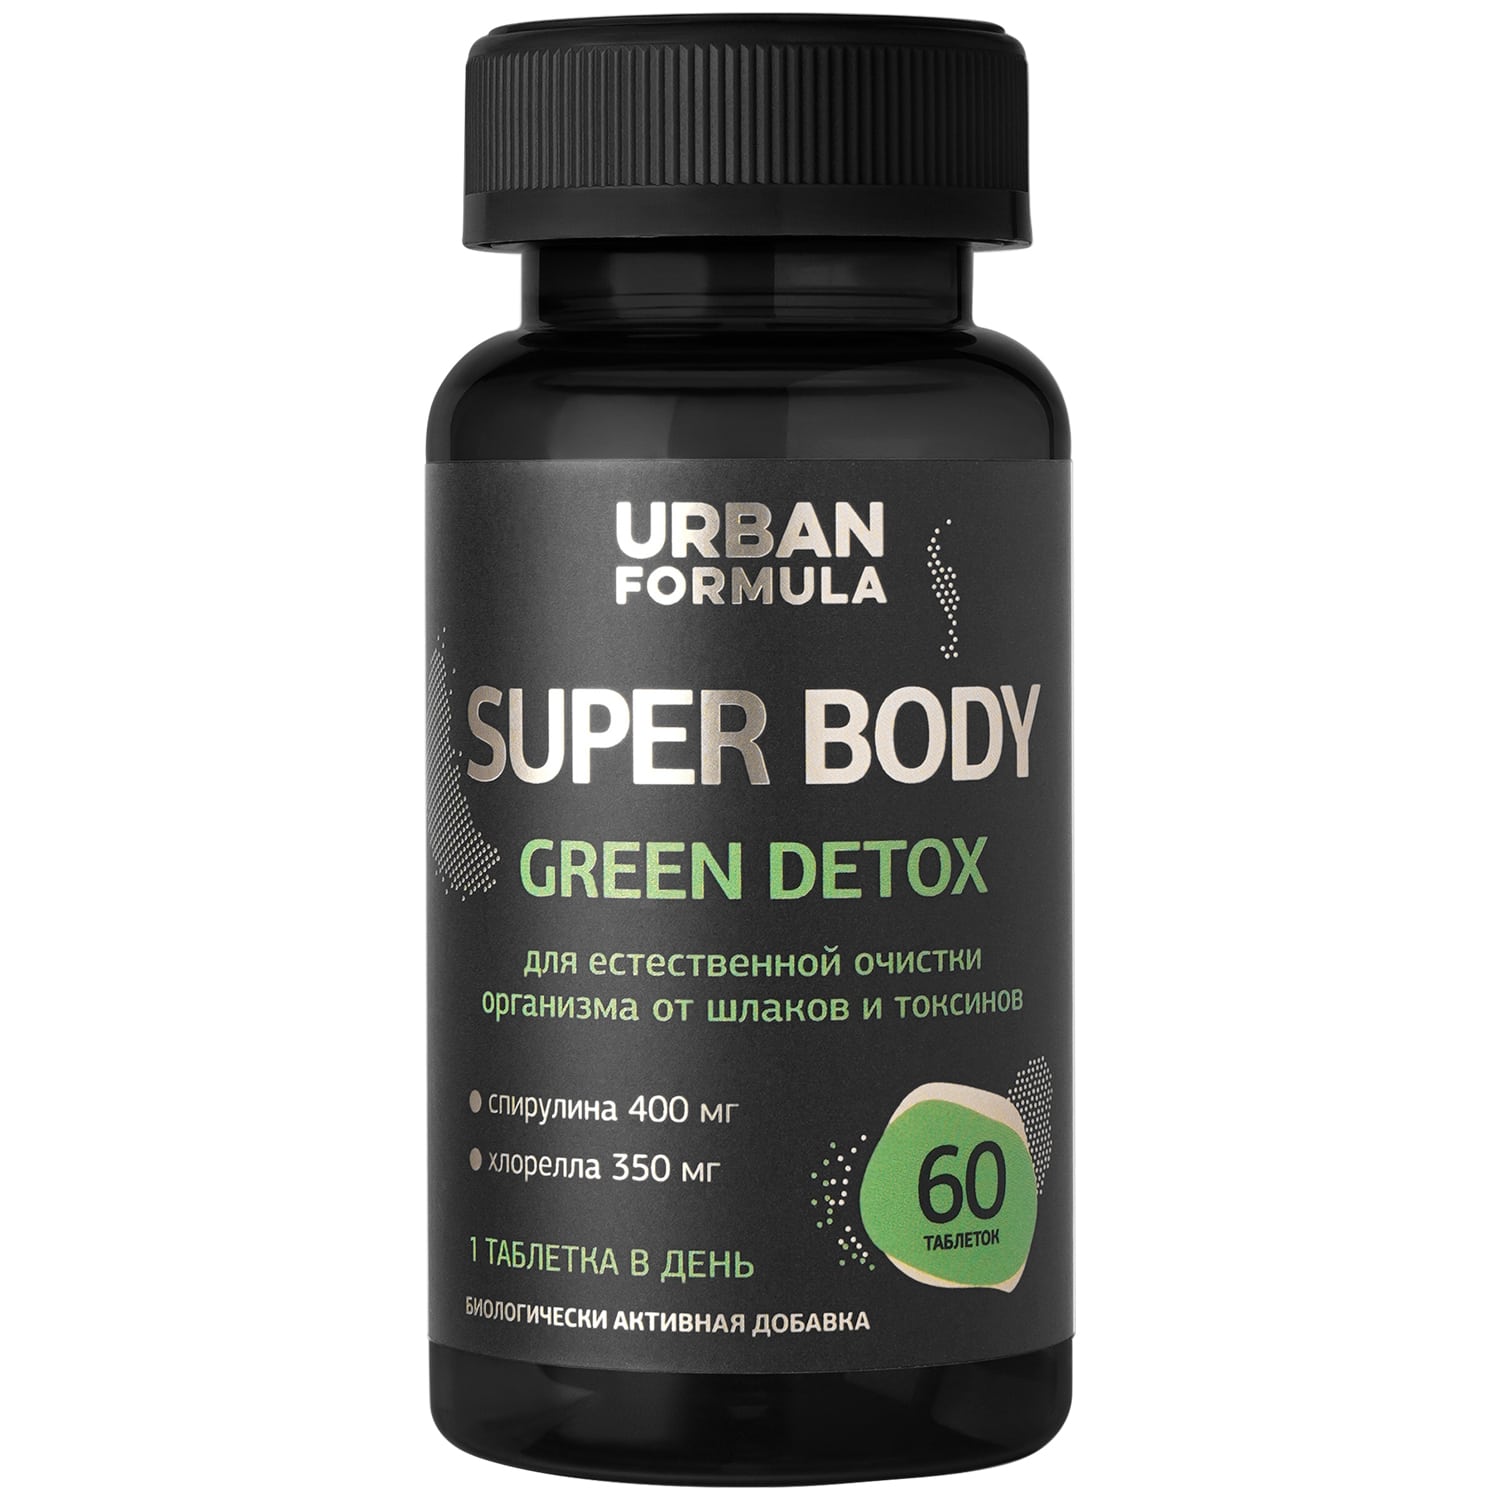 Urban Formula Комплекс на растительной основе Green Detox, 60 таблеток (Urban Formula, Super Body) биологически активная добавка urban formula green detox 60 шт